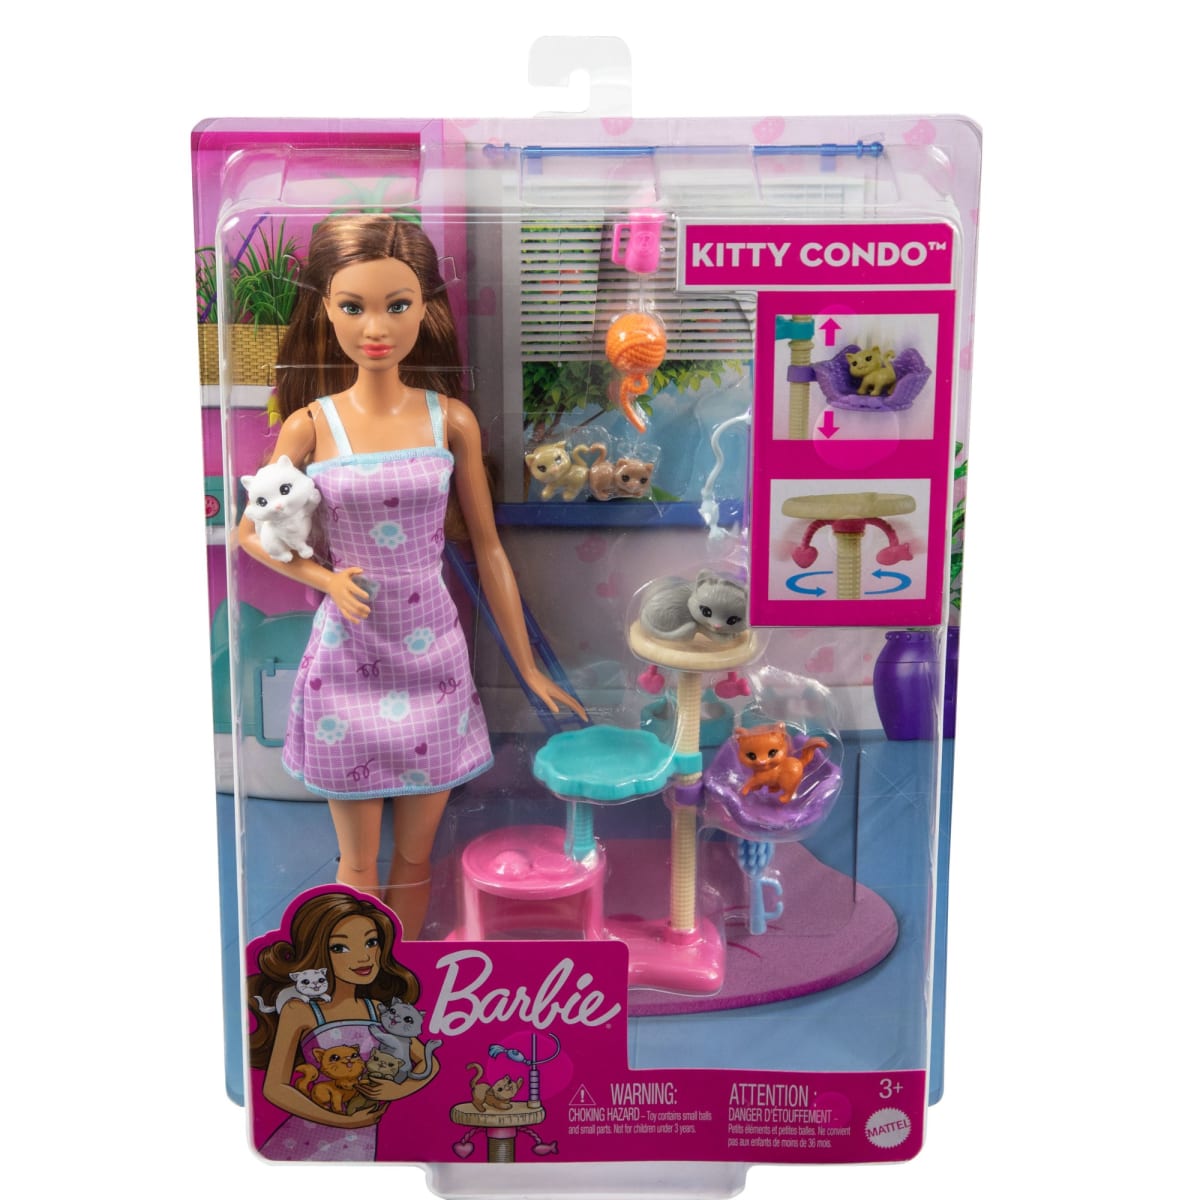 Barbie Kitty Condo nukke  verkkokauppa